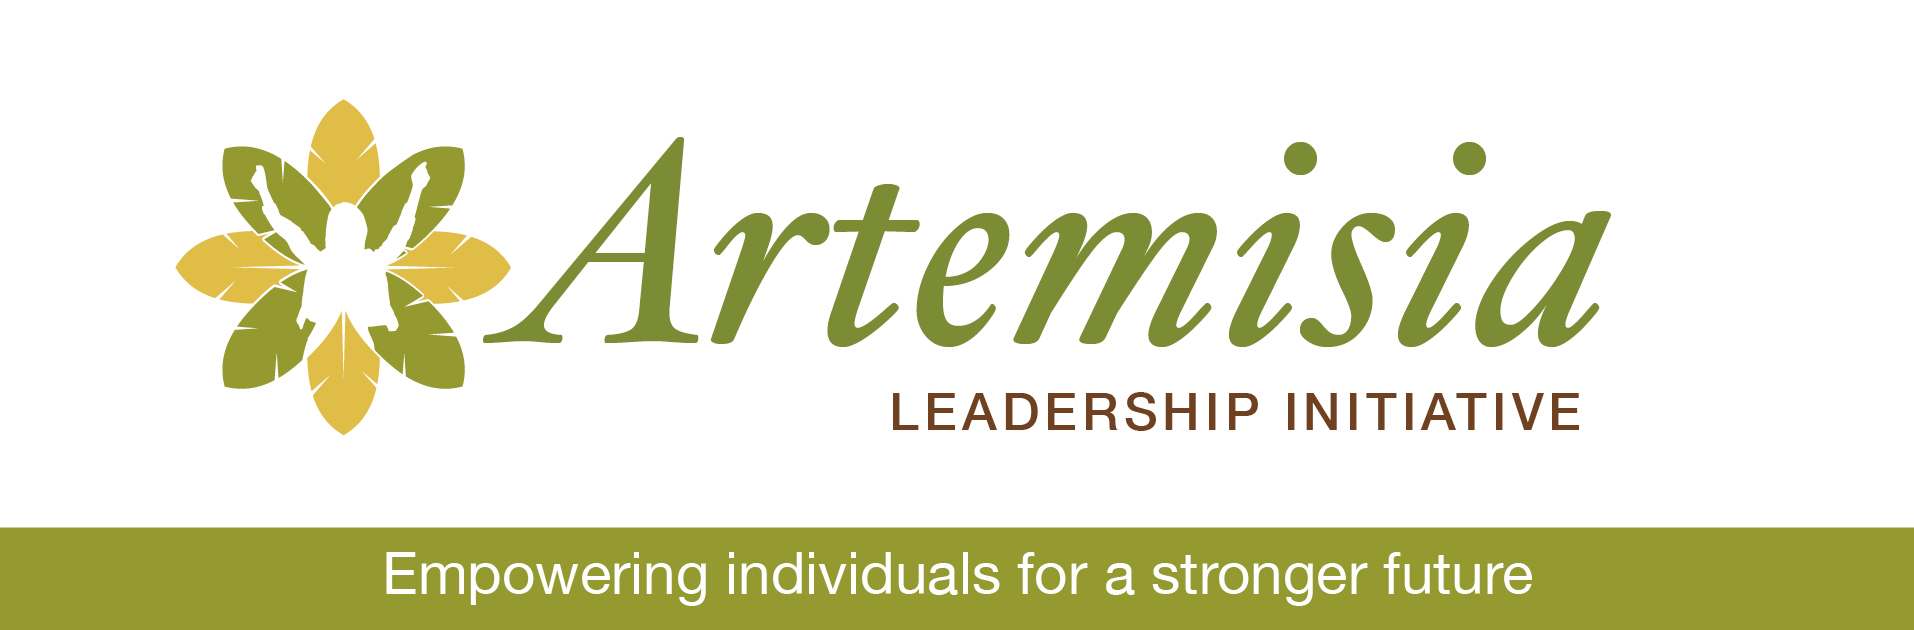 Image reads "Artemisia Leadership Initiative"